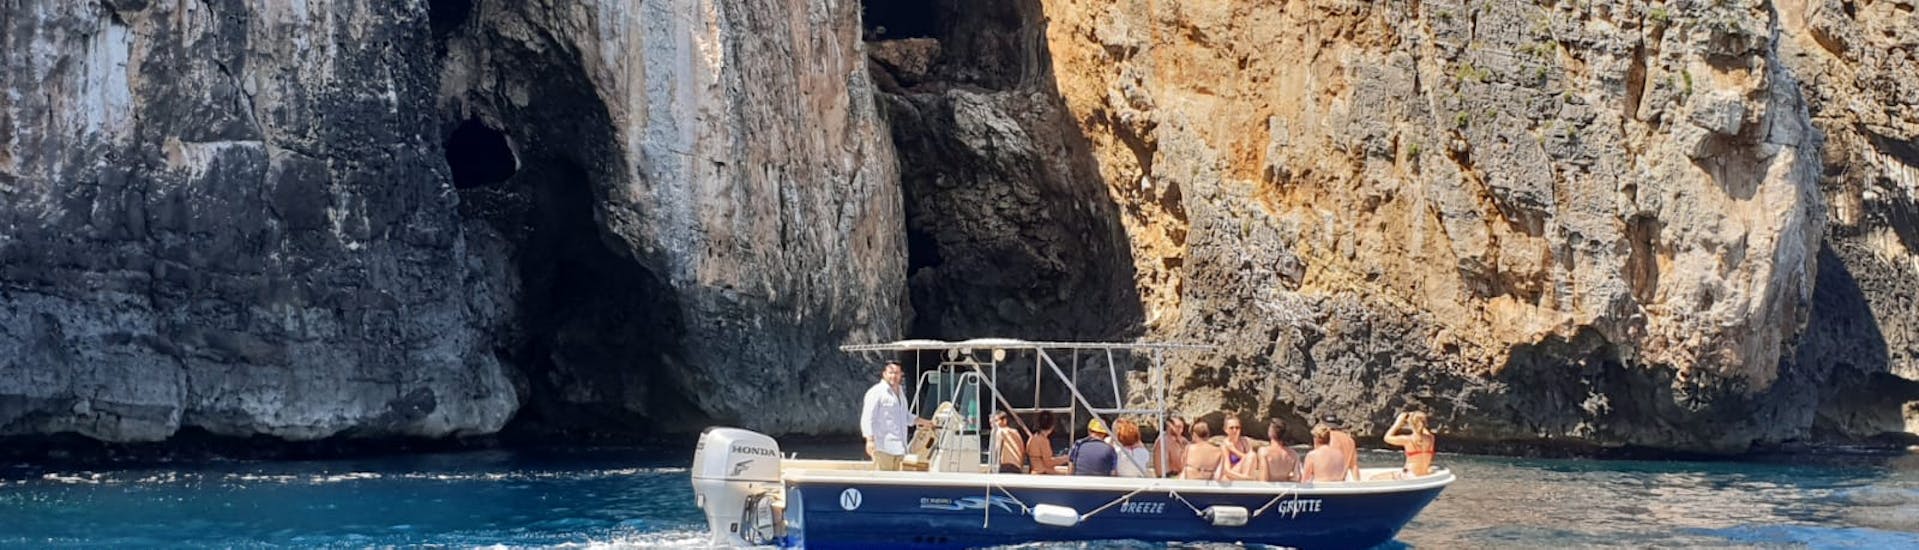 Notre bateau passant devant les grottes pendant la balade en bateau aux grottes de Santa Maria di Leuca avec déjeuner.